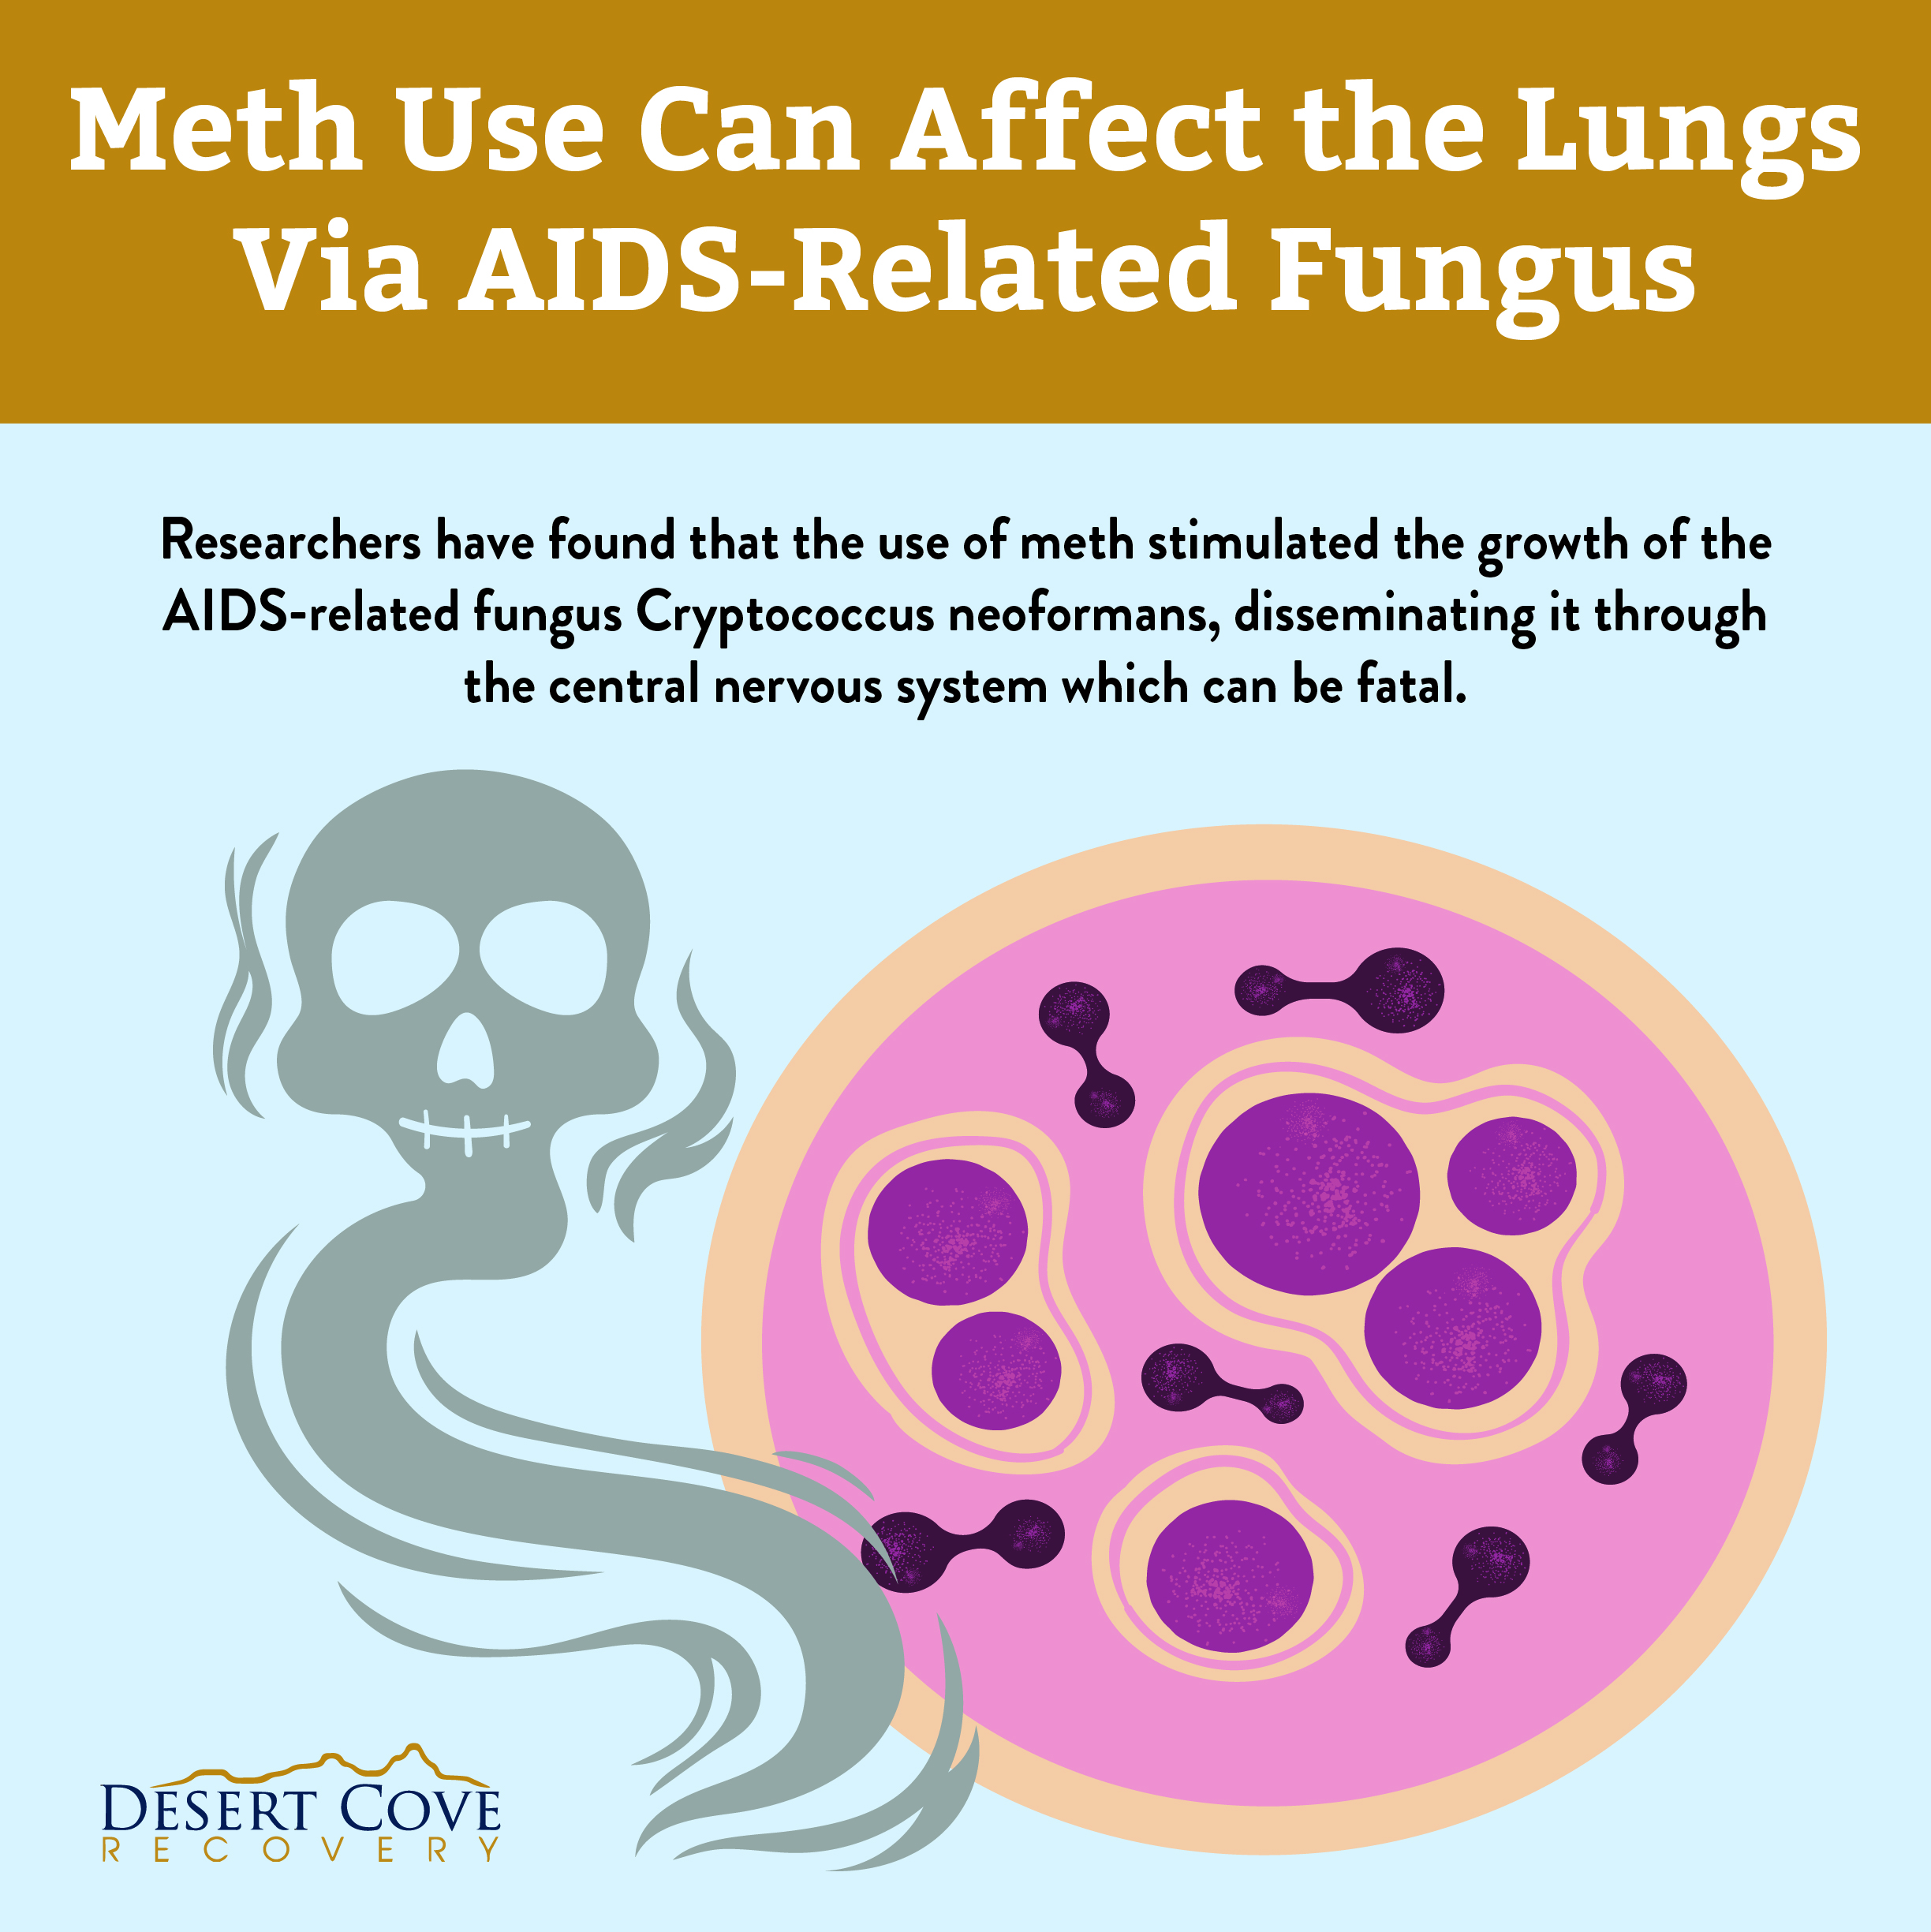 methamphetamine and AIDS related Fungus